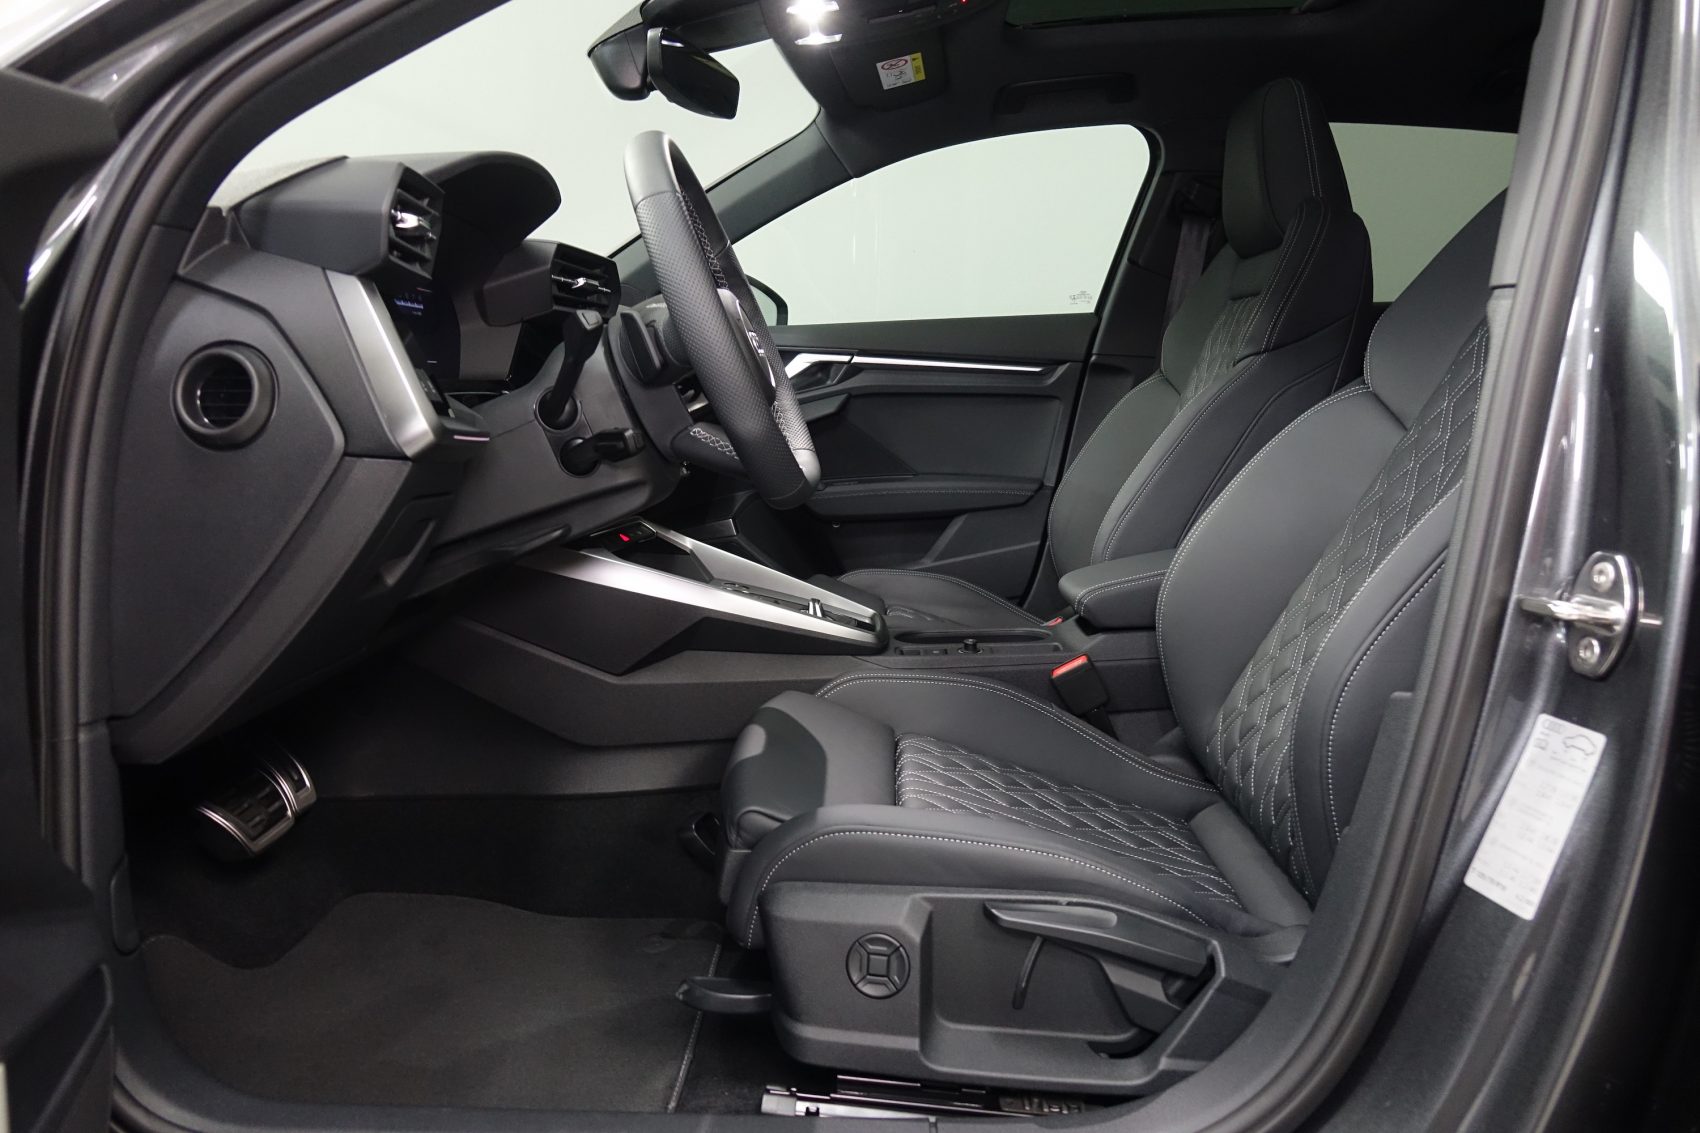 2023 Audi S3 Sportback (310hp) - Interior and Exterior Details